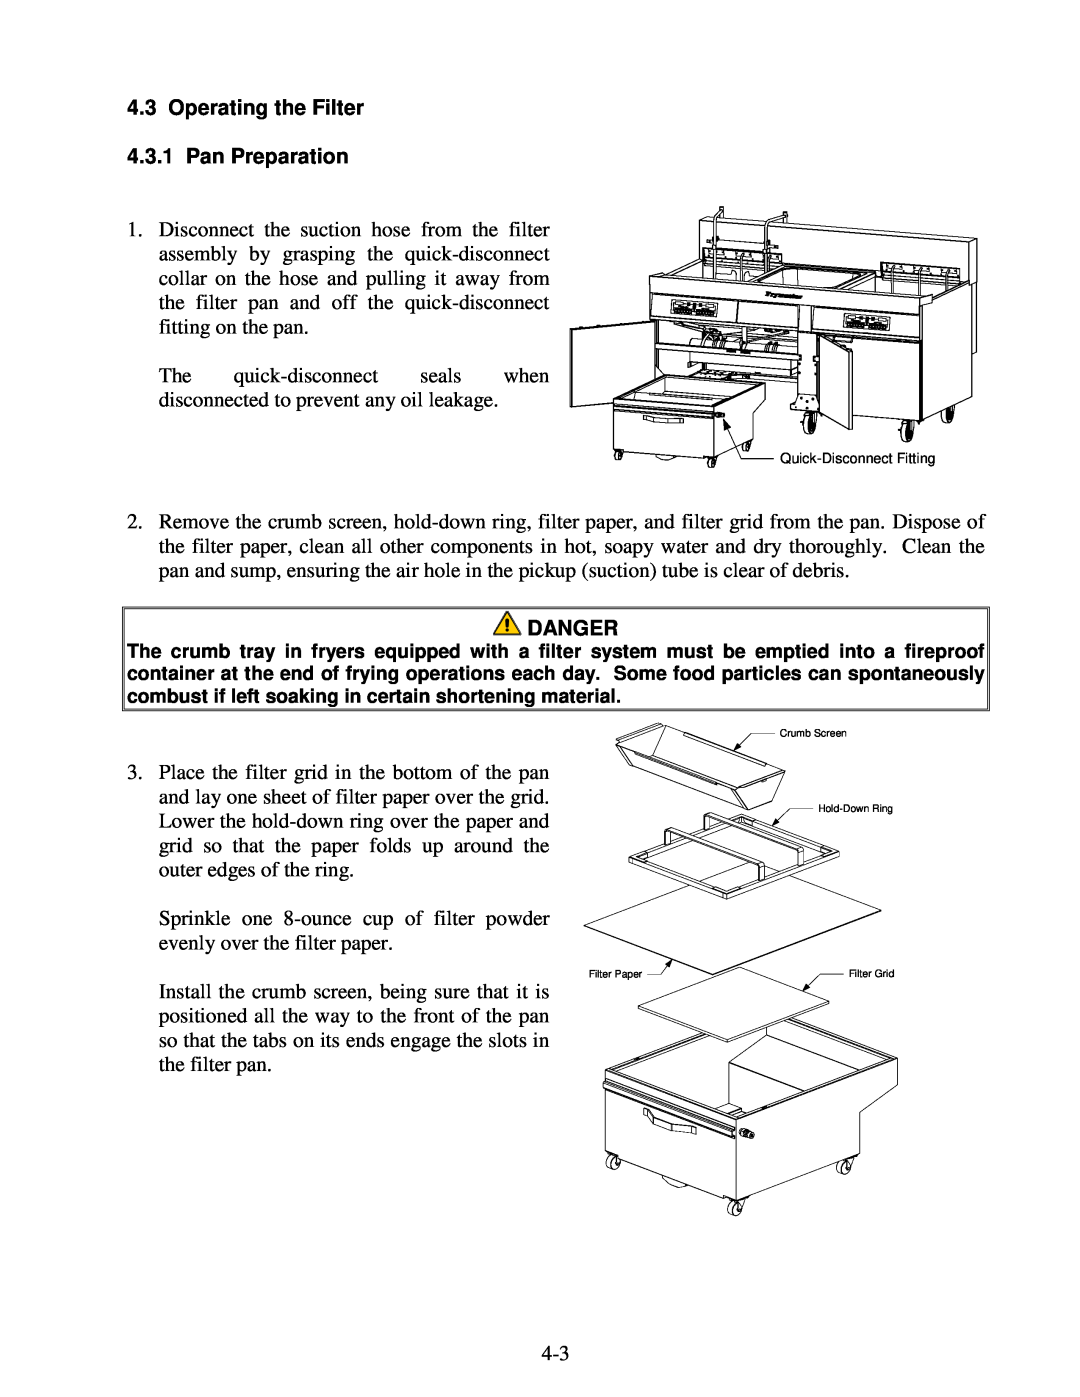 Frymaster 2836 Series operation manual 4.3Operating the Filter 4.3.1 Pan Preparation, Danger 